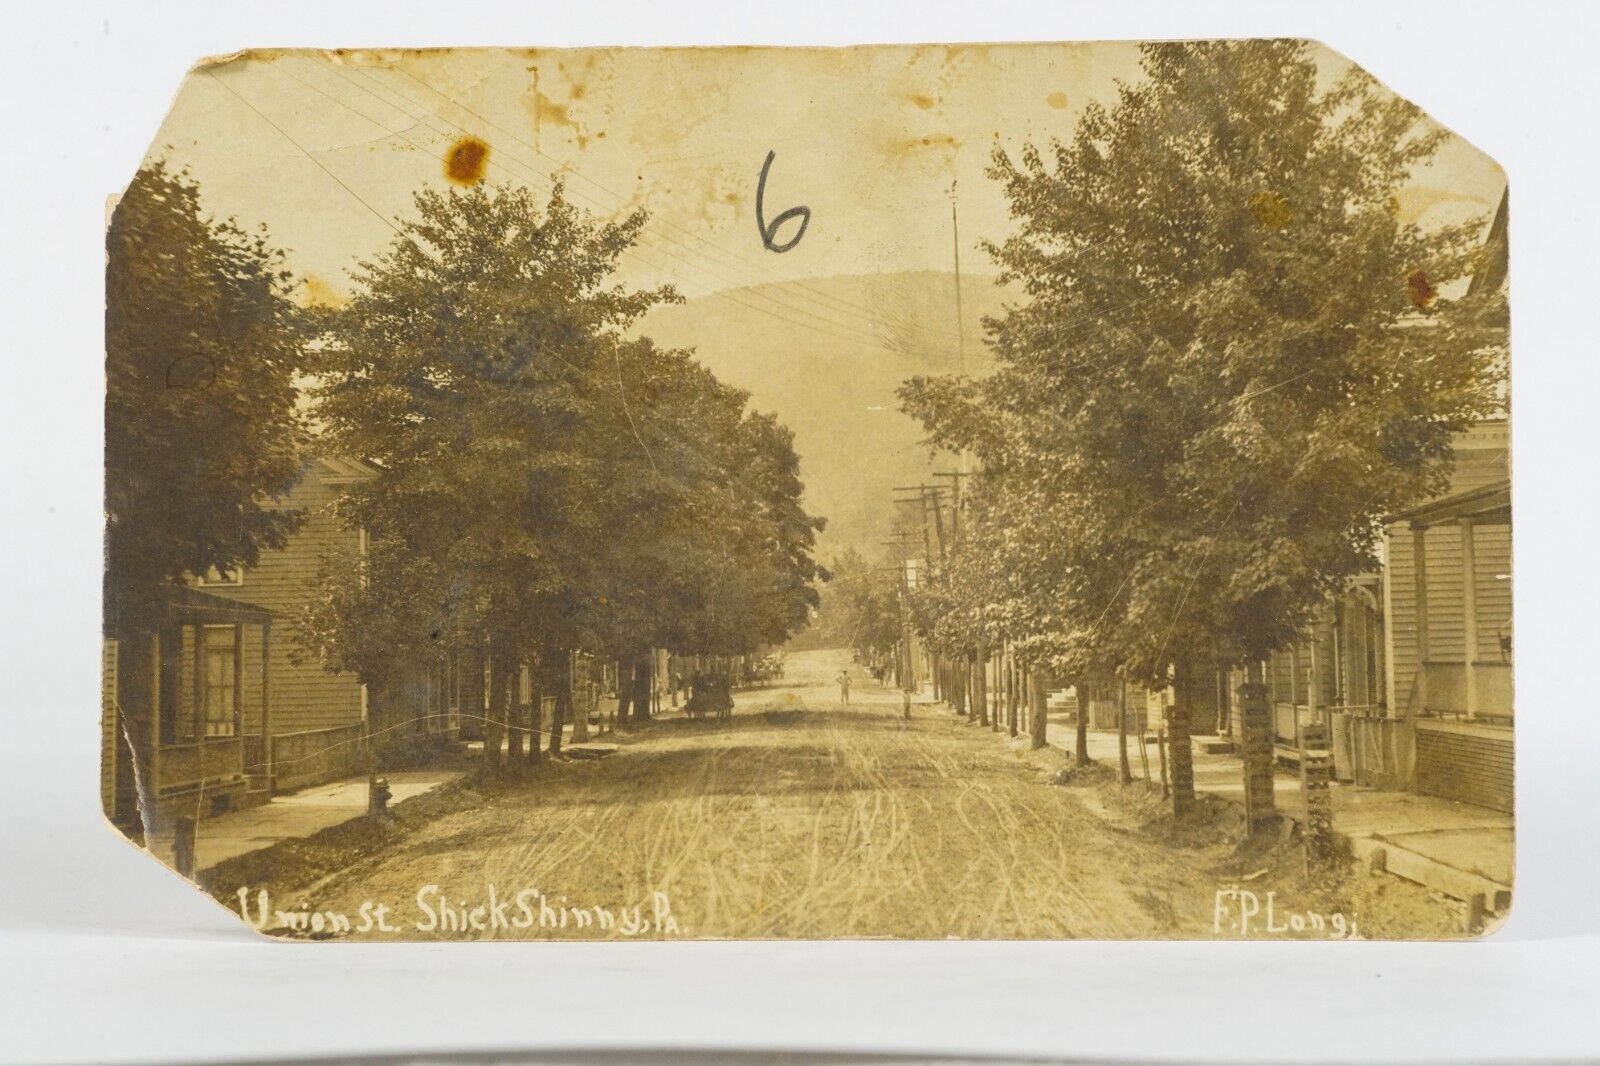 1909 Shickshinny PA Photo Union Street RPPC Photo FP Longi